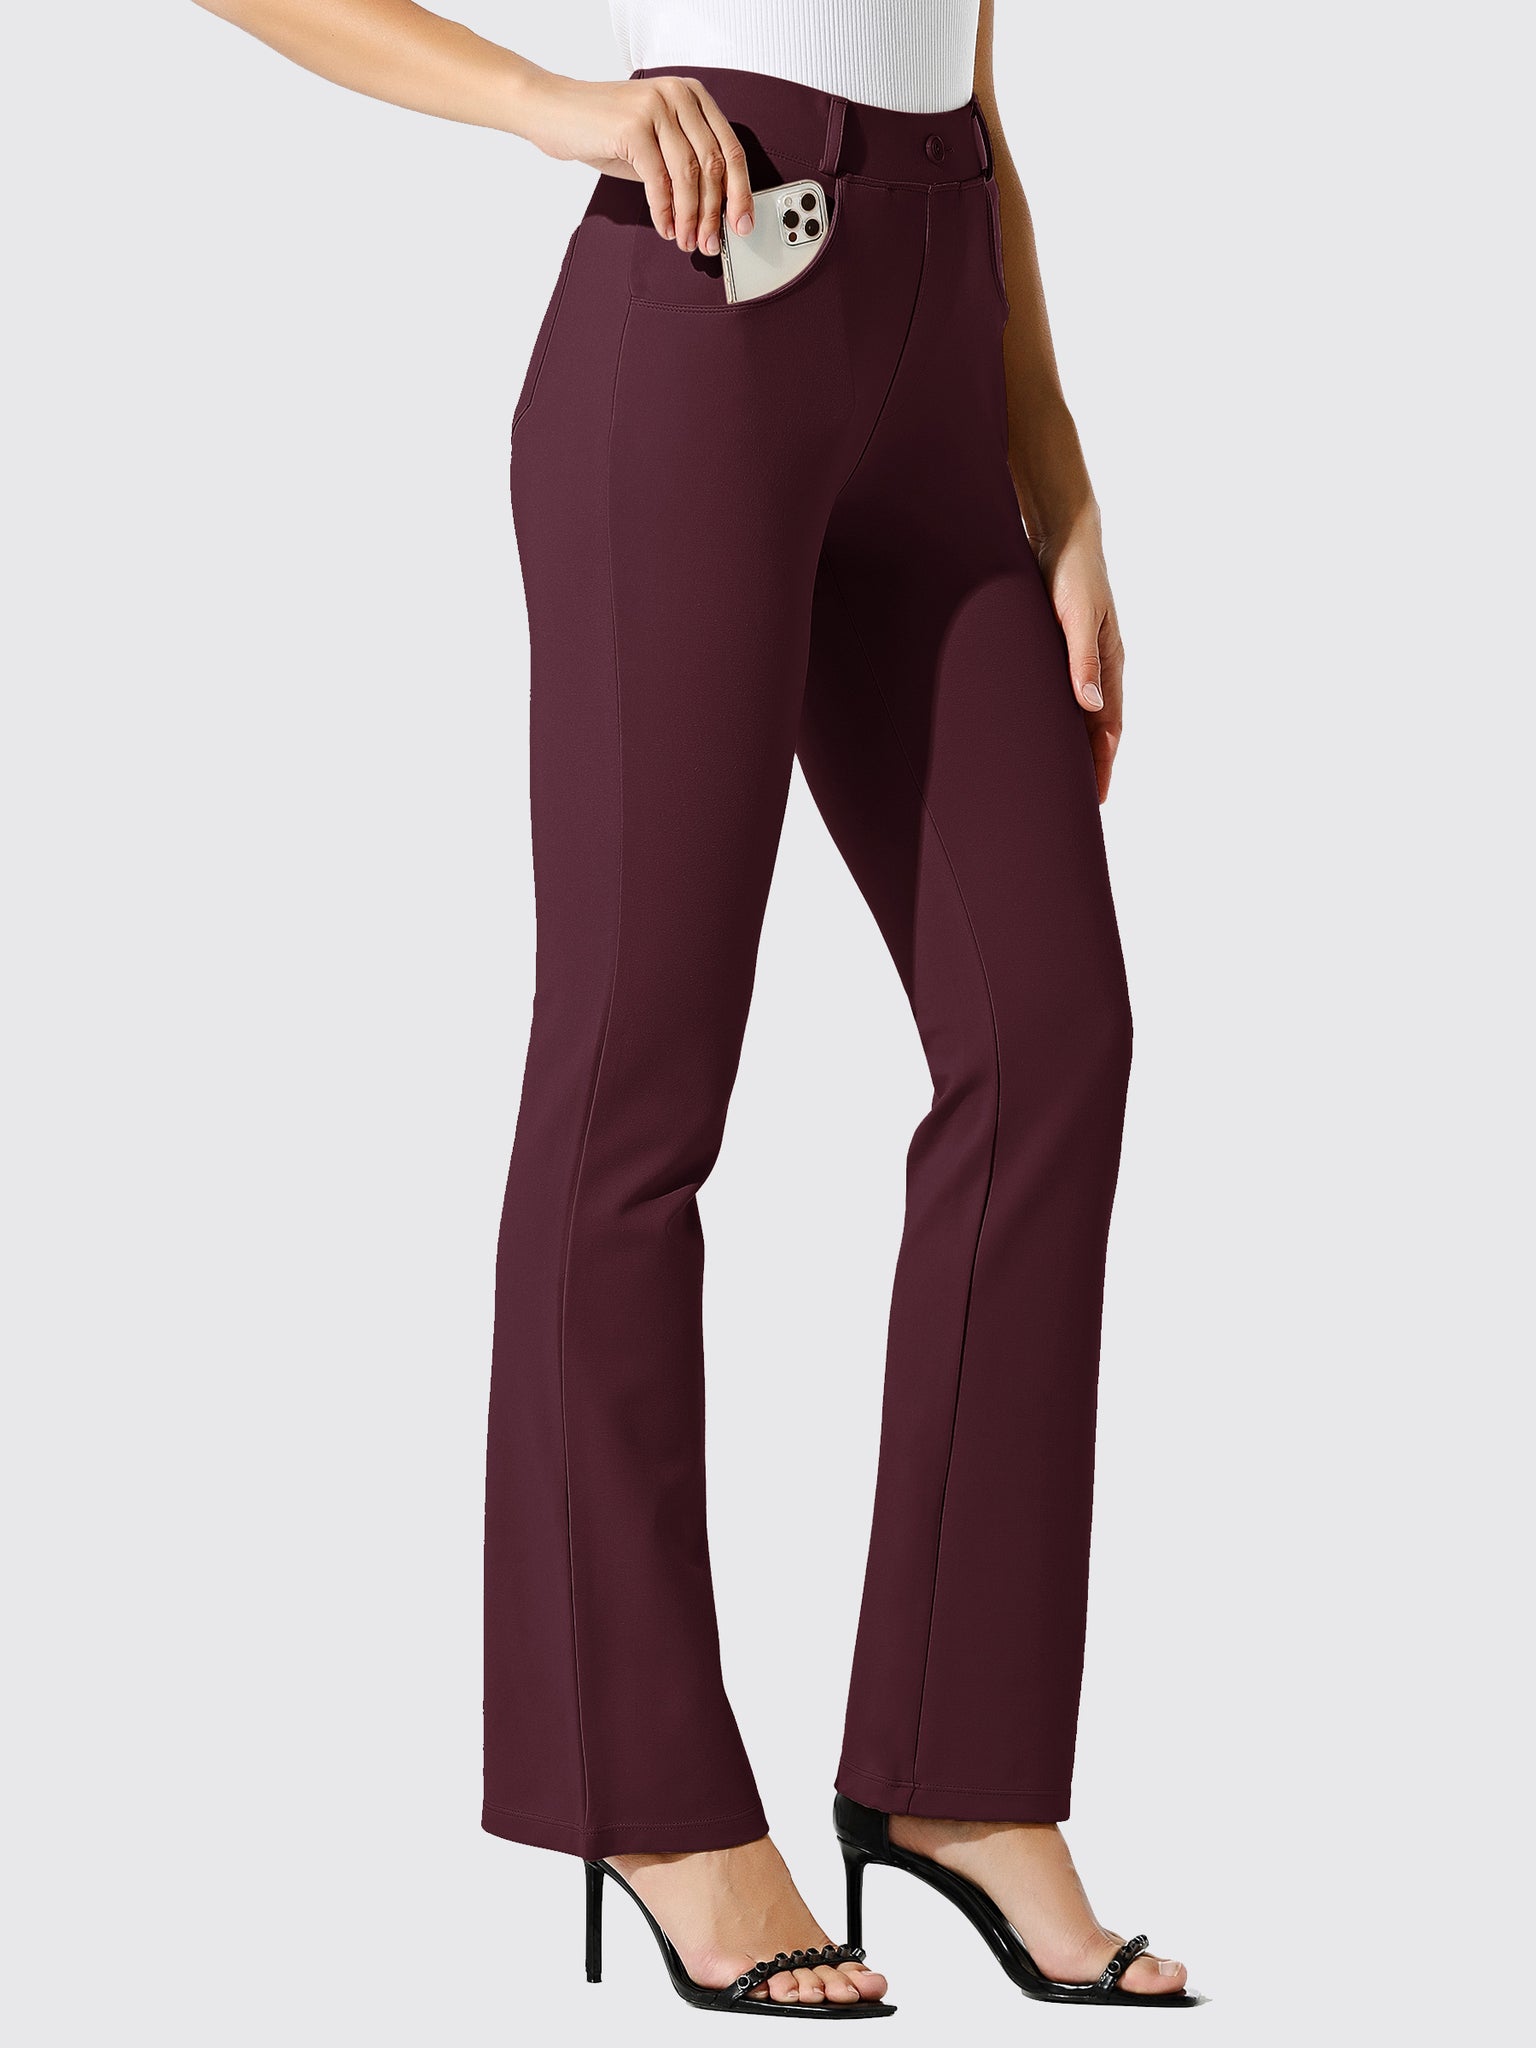 Betabrand, Pants & Jumpsuits, Betabrand Bootcut Classic Red Yoga Dress  Pants Size Medium Petite